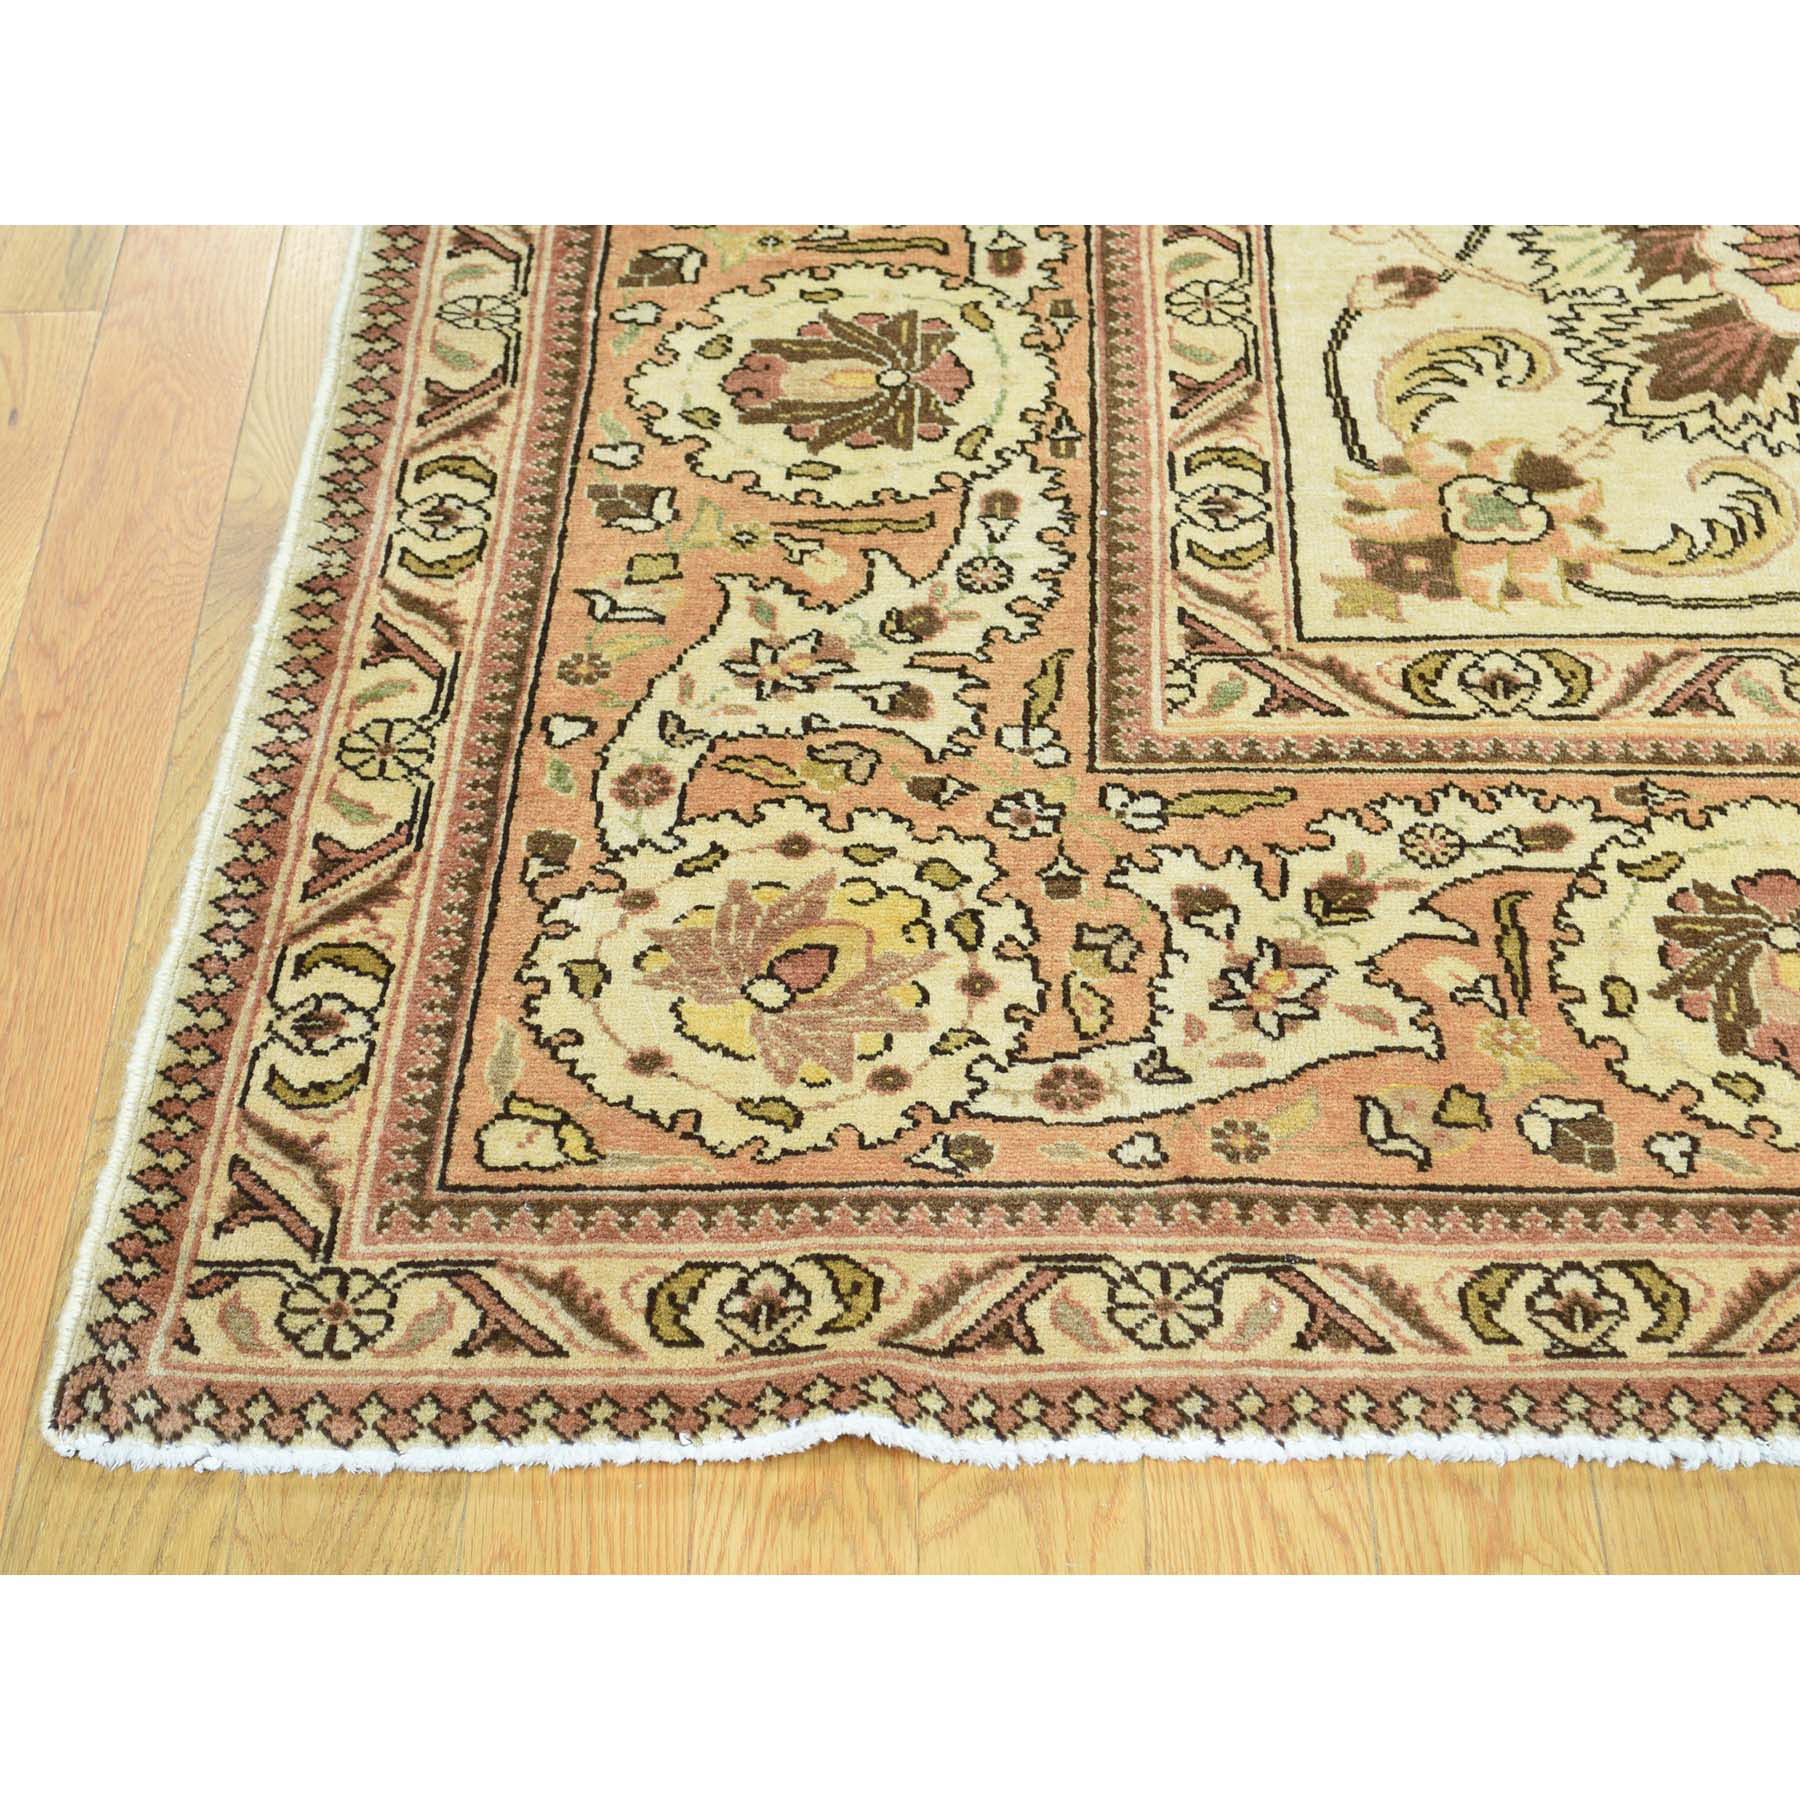 9'8"x12'10" Antique Persian Tabriz Hand Woven Full Pile Oriental Rug 